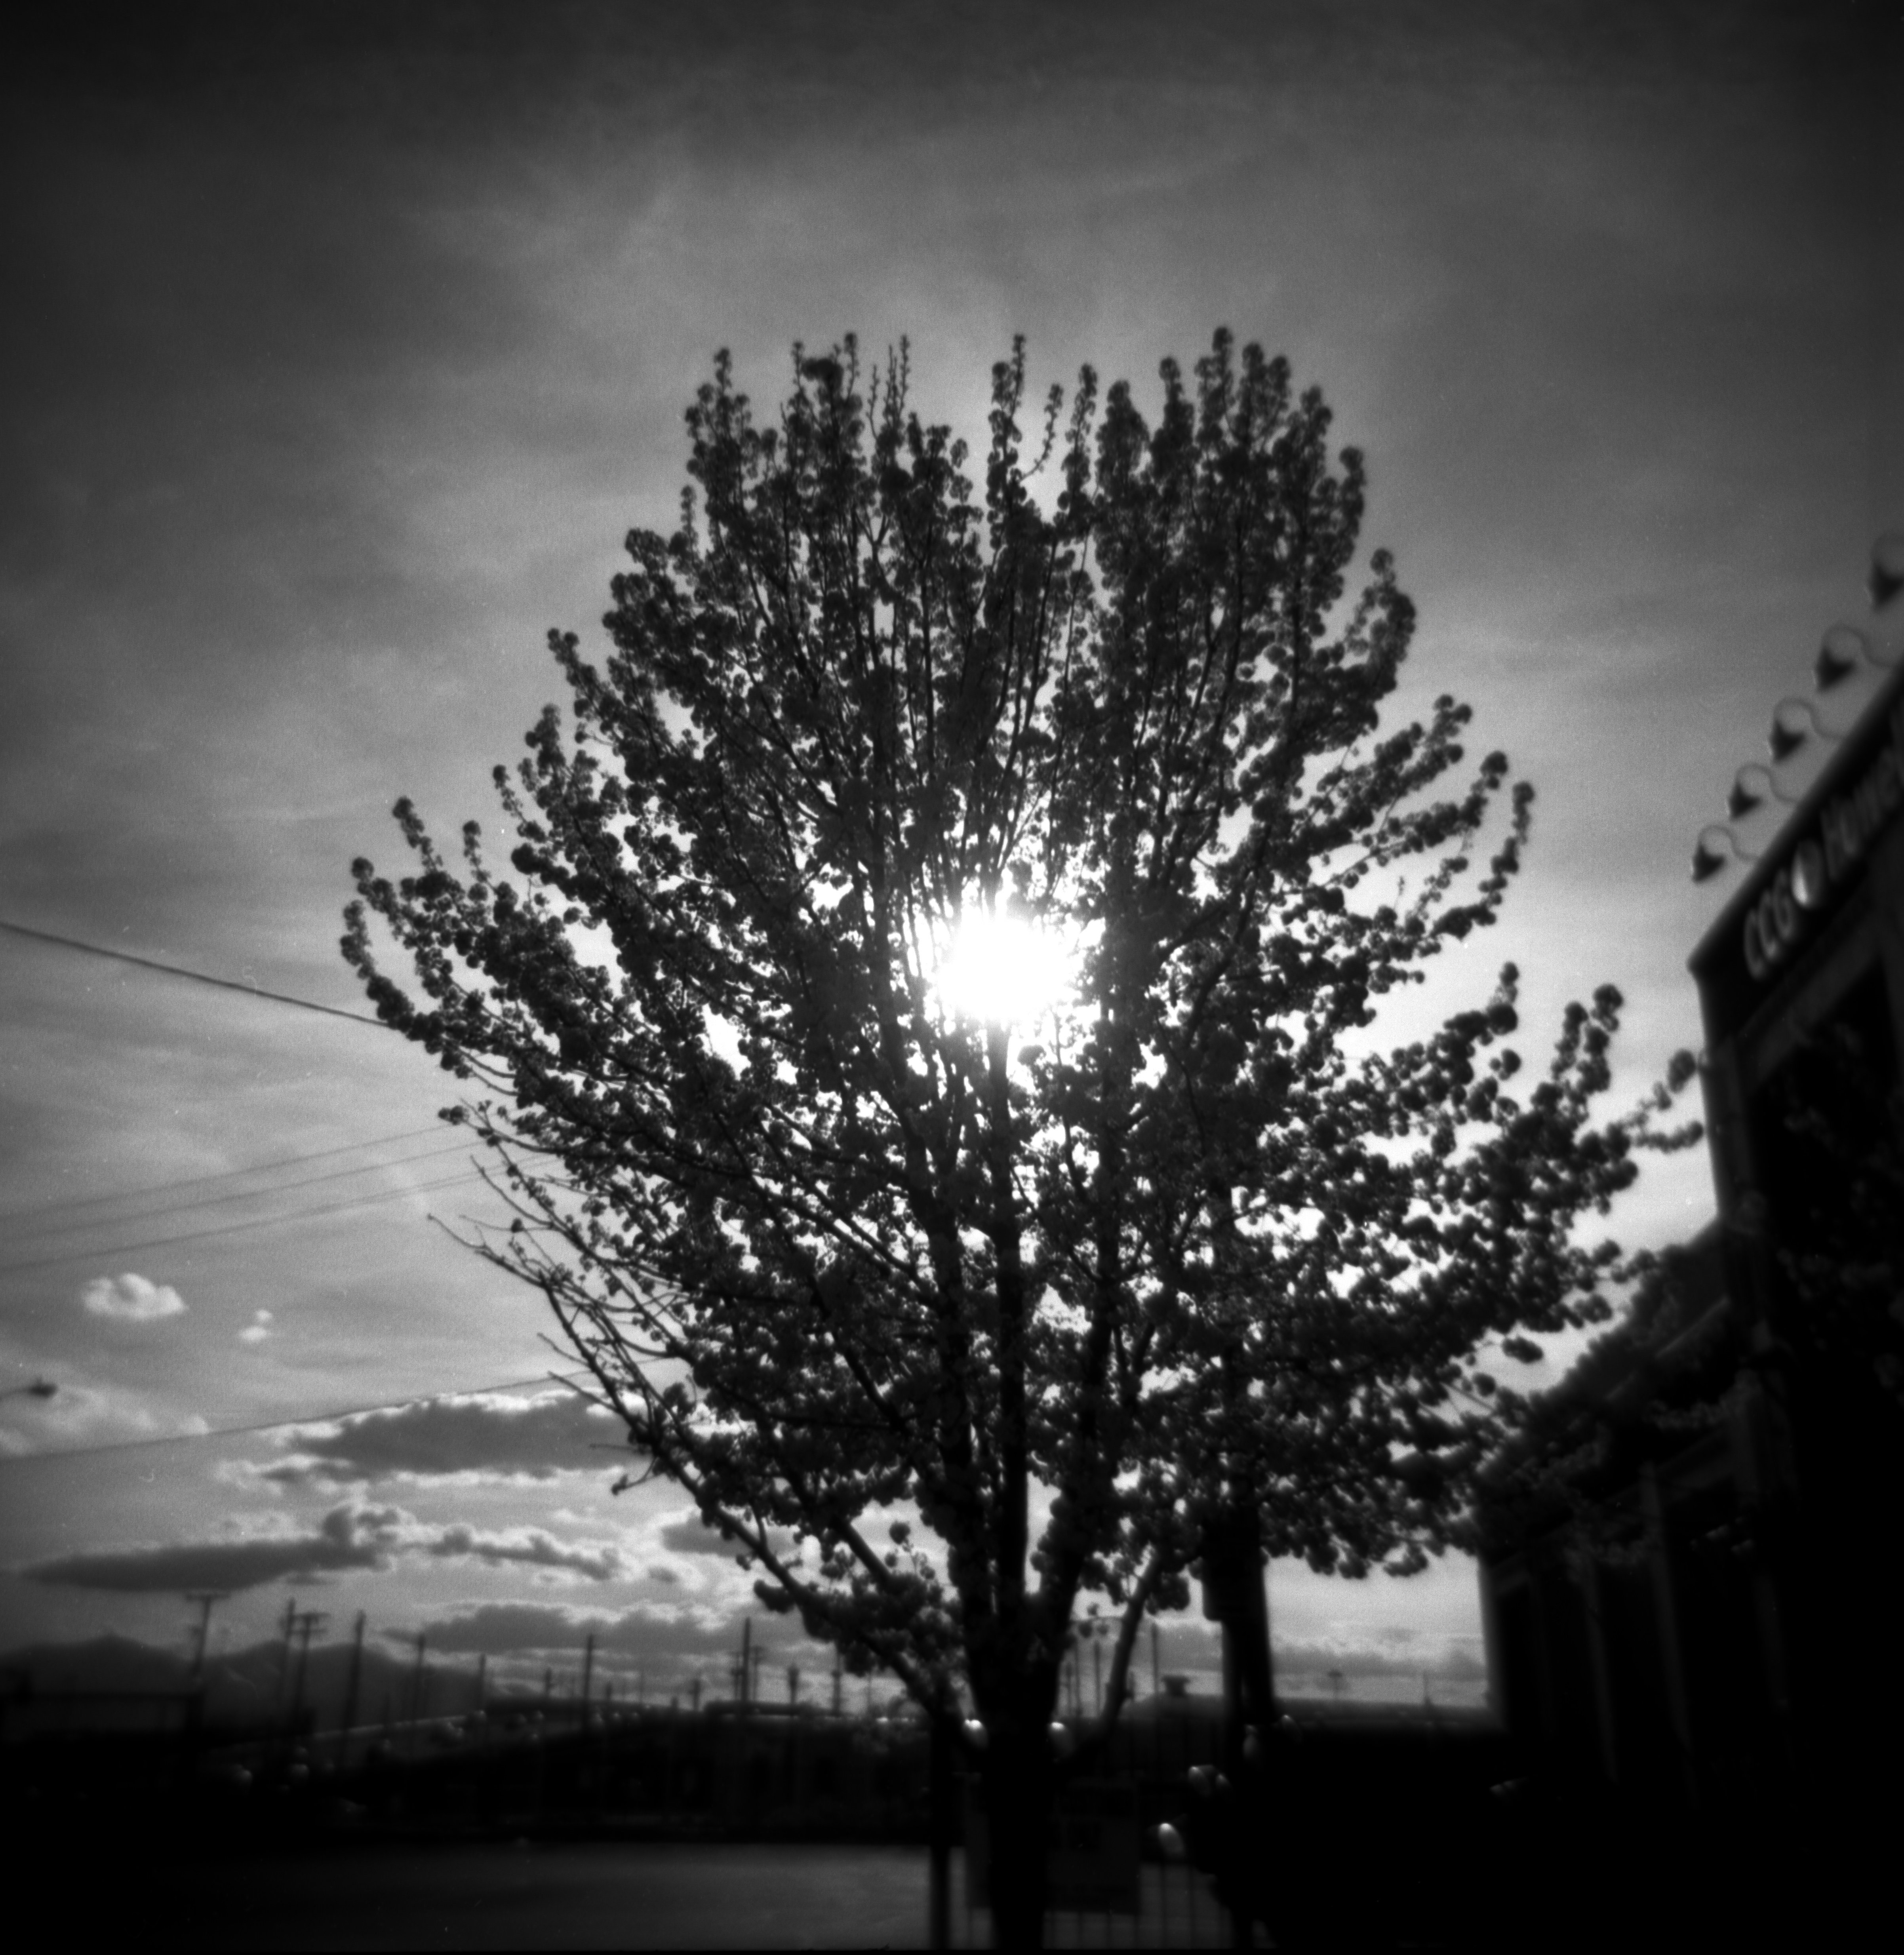 holga black and white film street photography